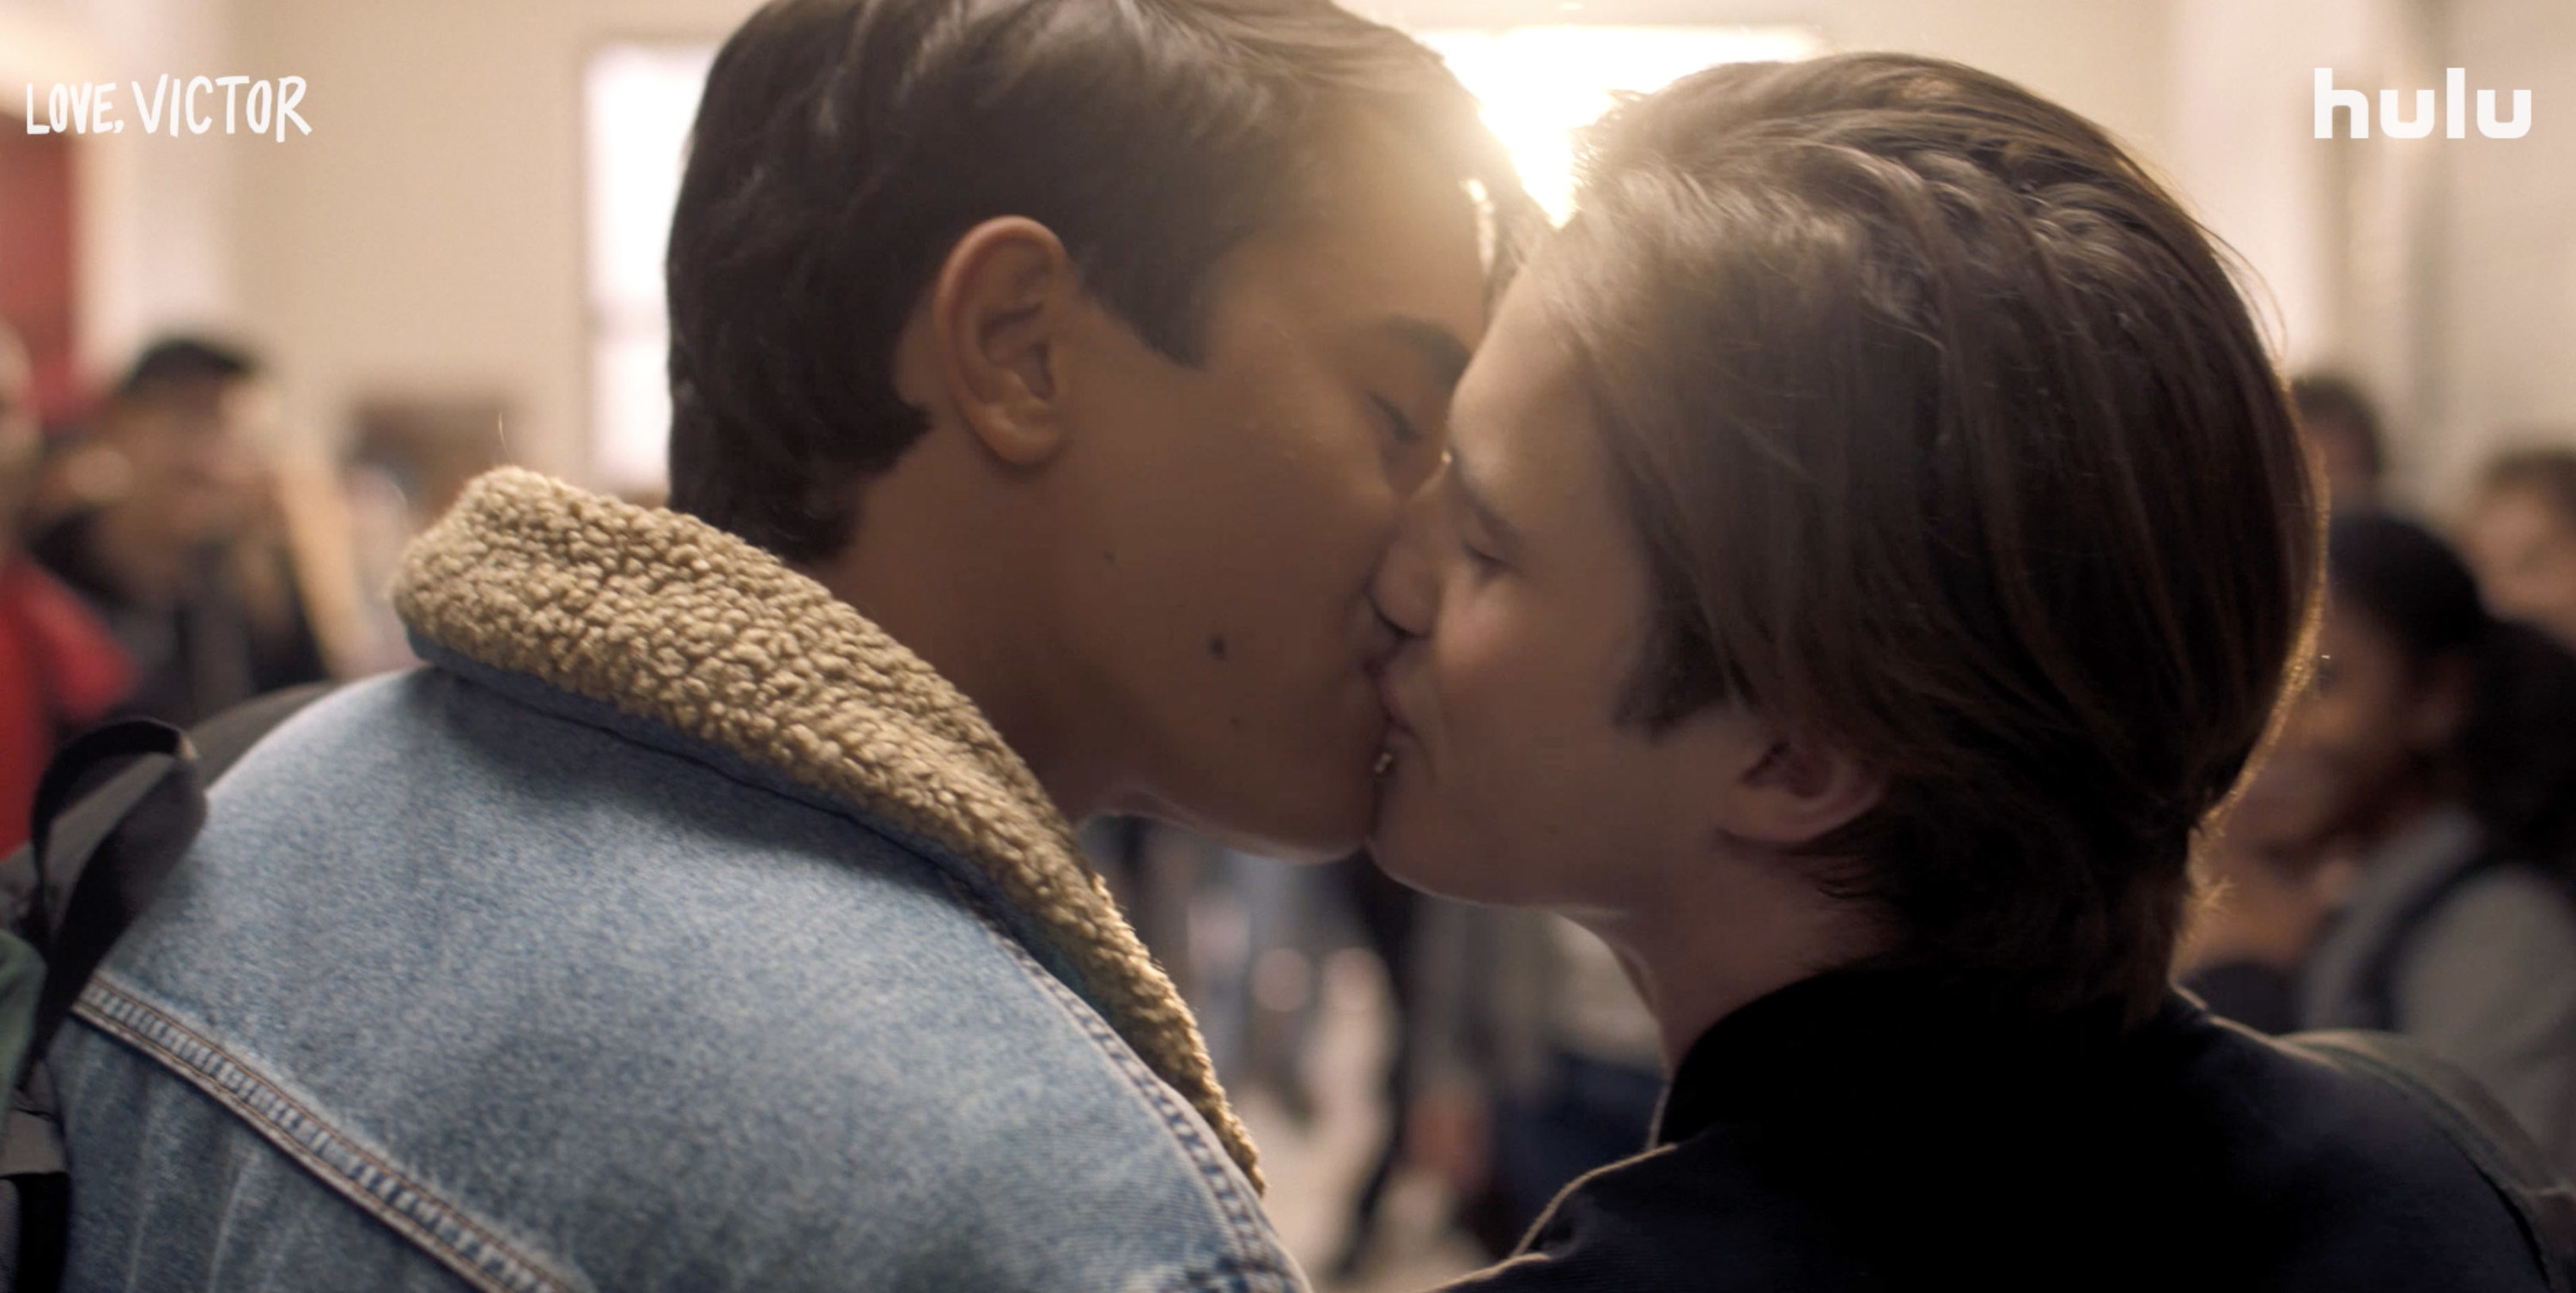 Victor and Benji kissing